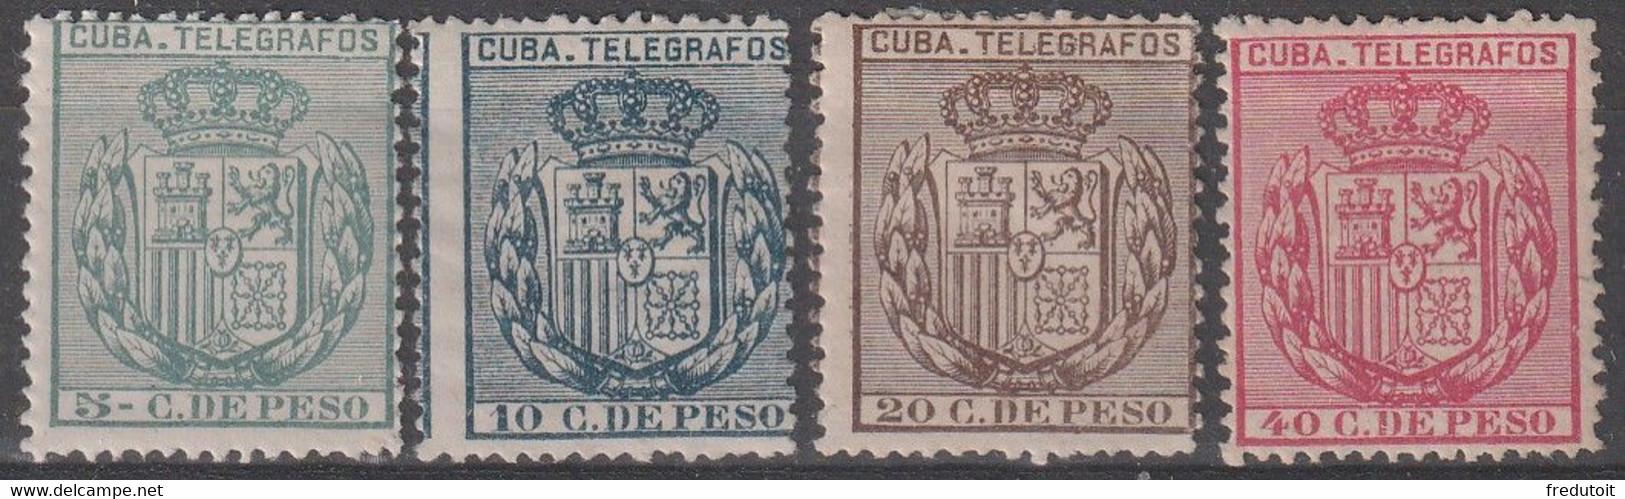 CUBA - TELEGRAPHE - N°78/81 * (1896) - Telégrafo